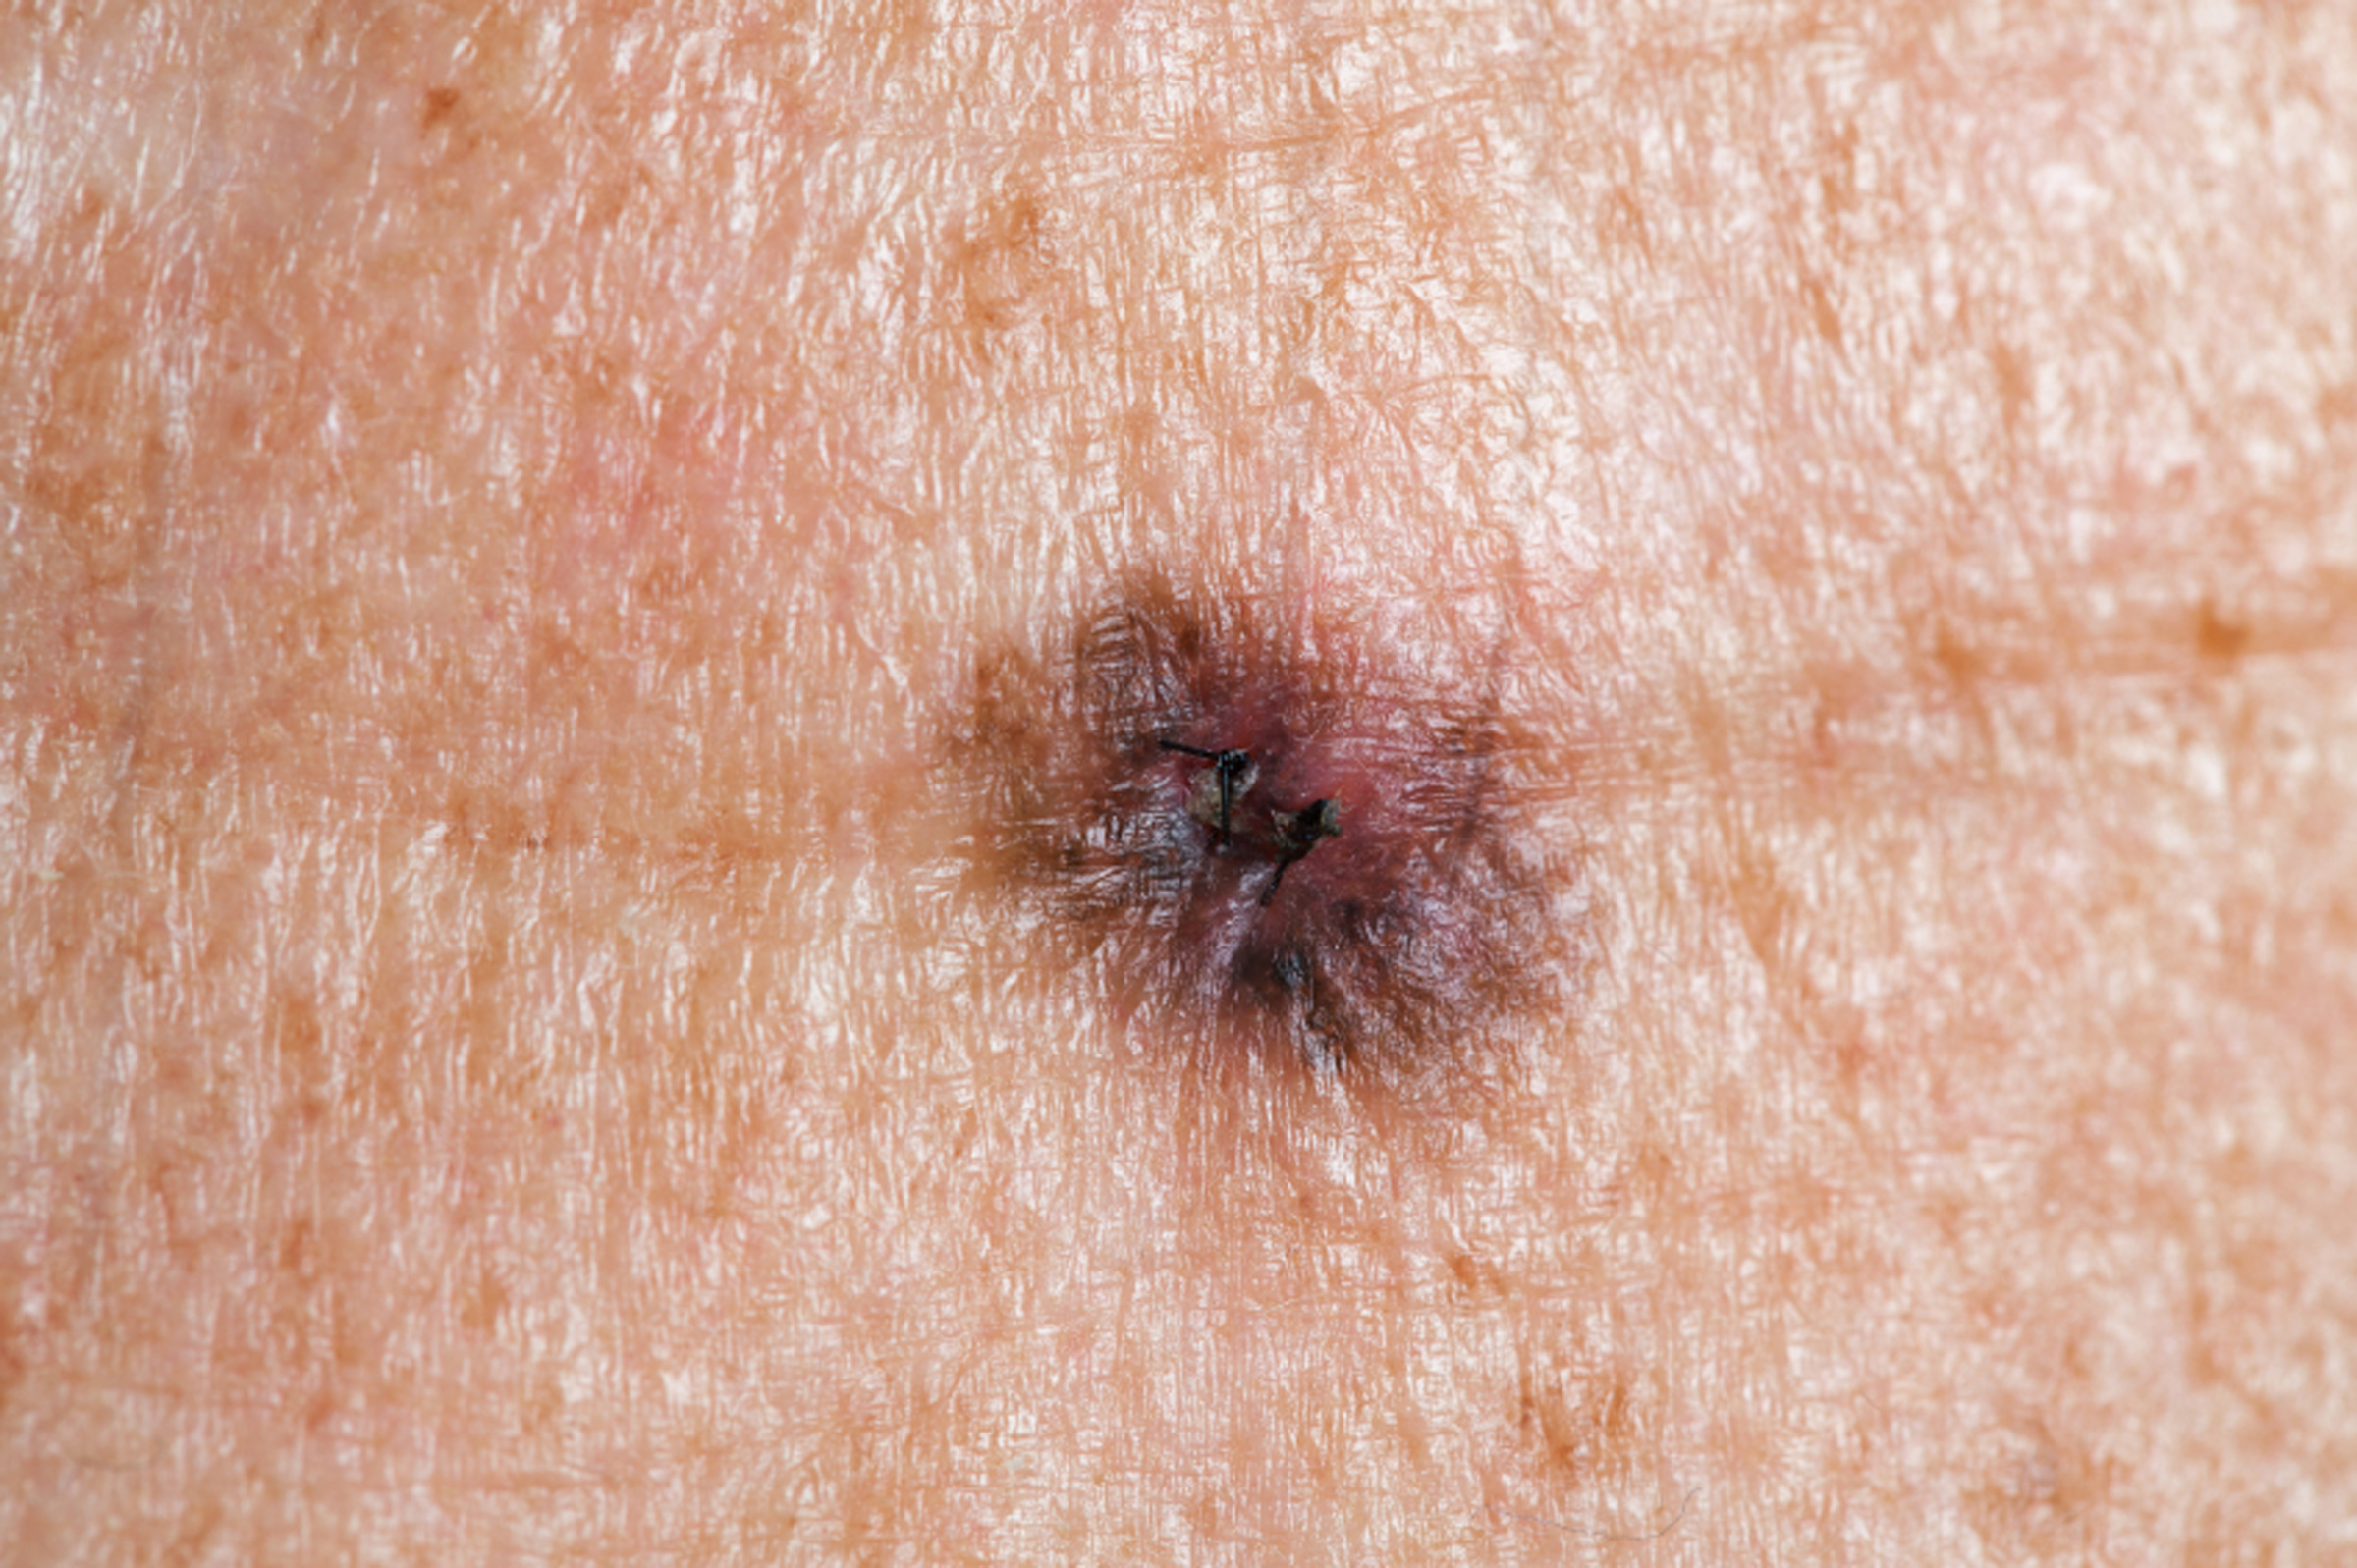 An image of Melanoma skin cancer.